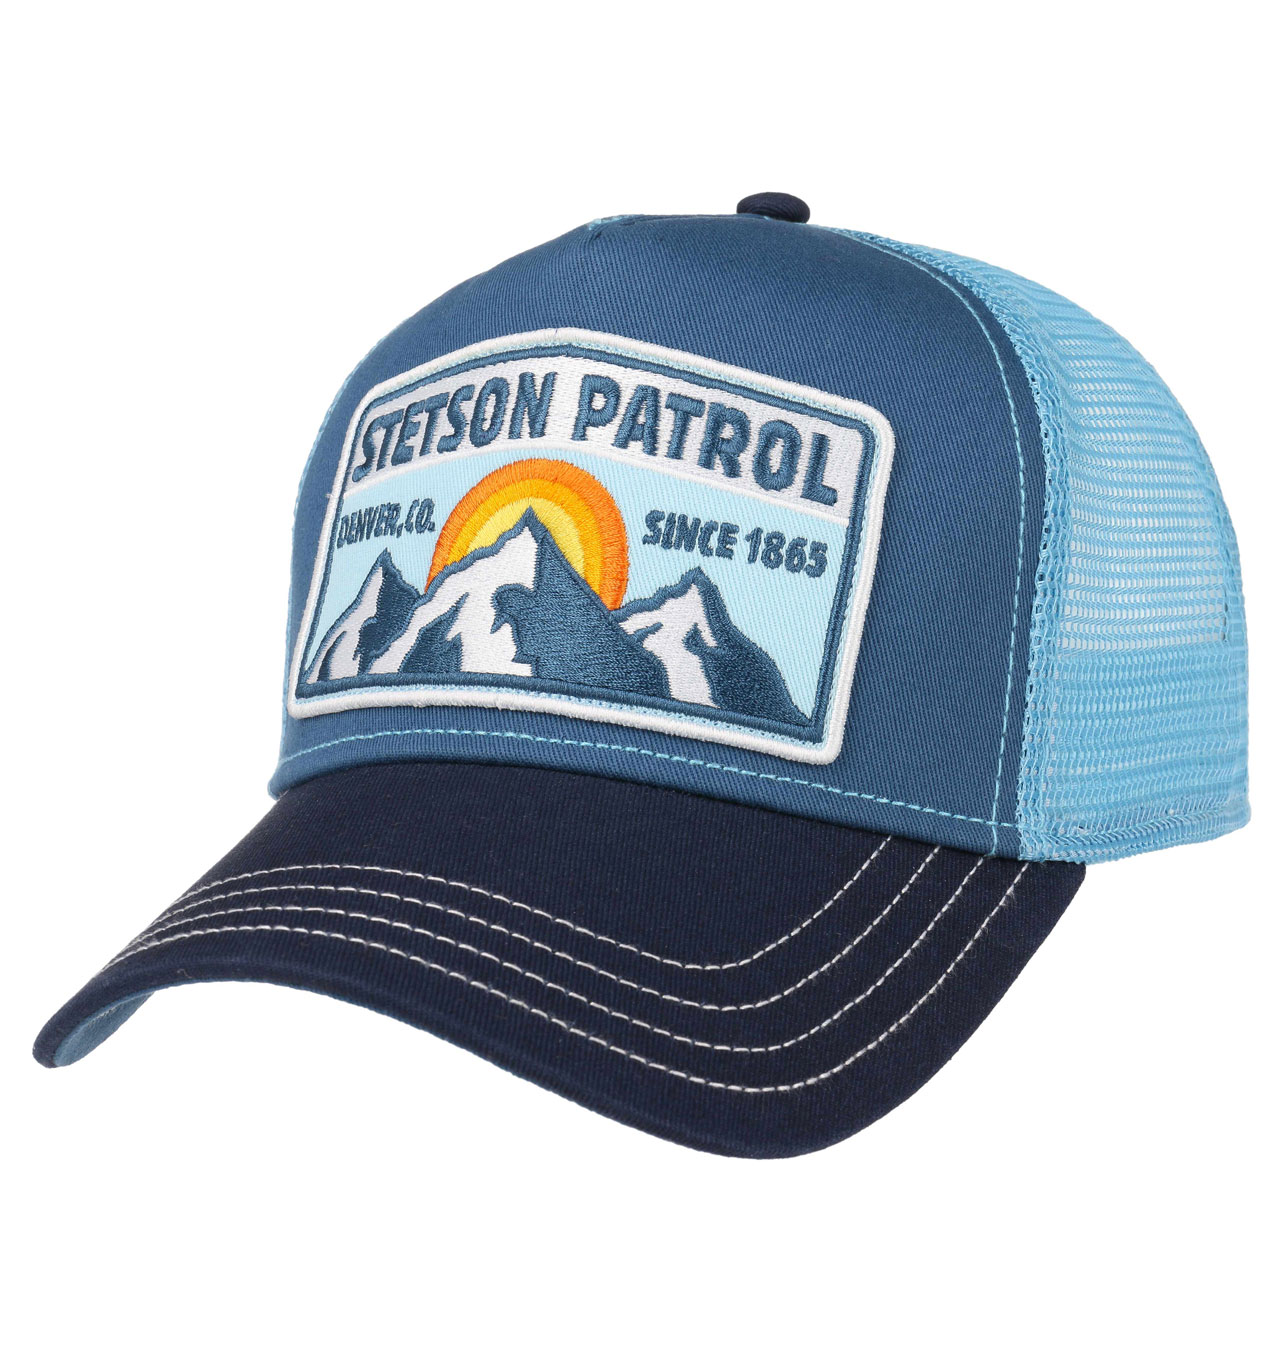 Stetson - Patrol Trucker Cap - Blue